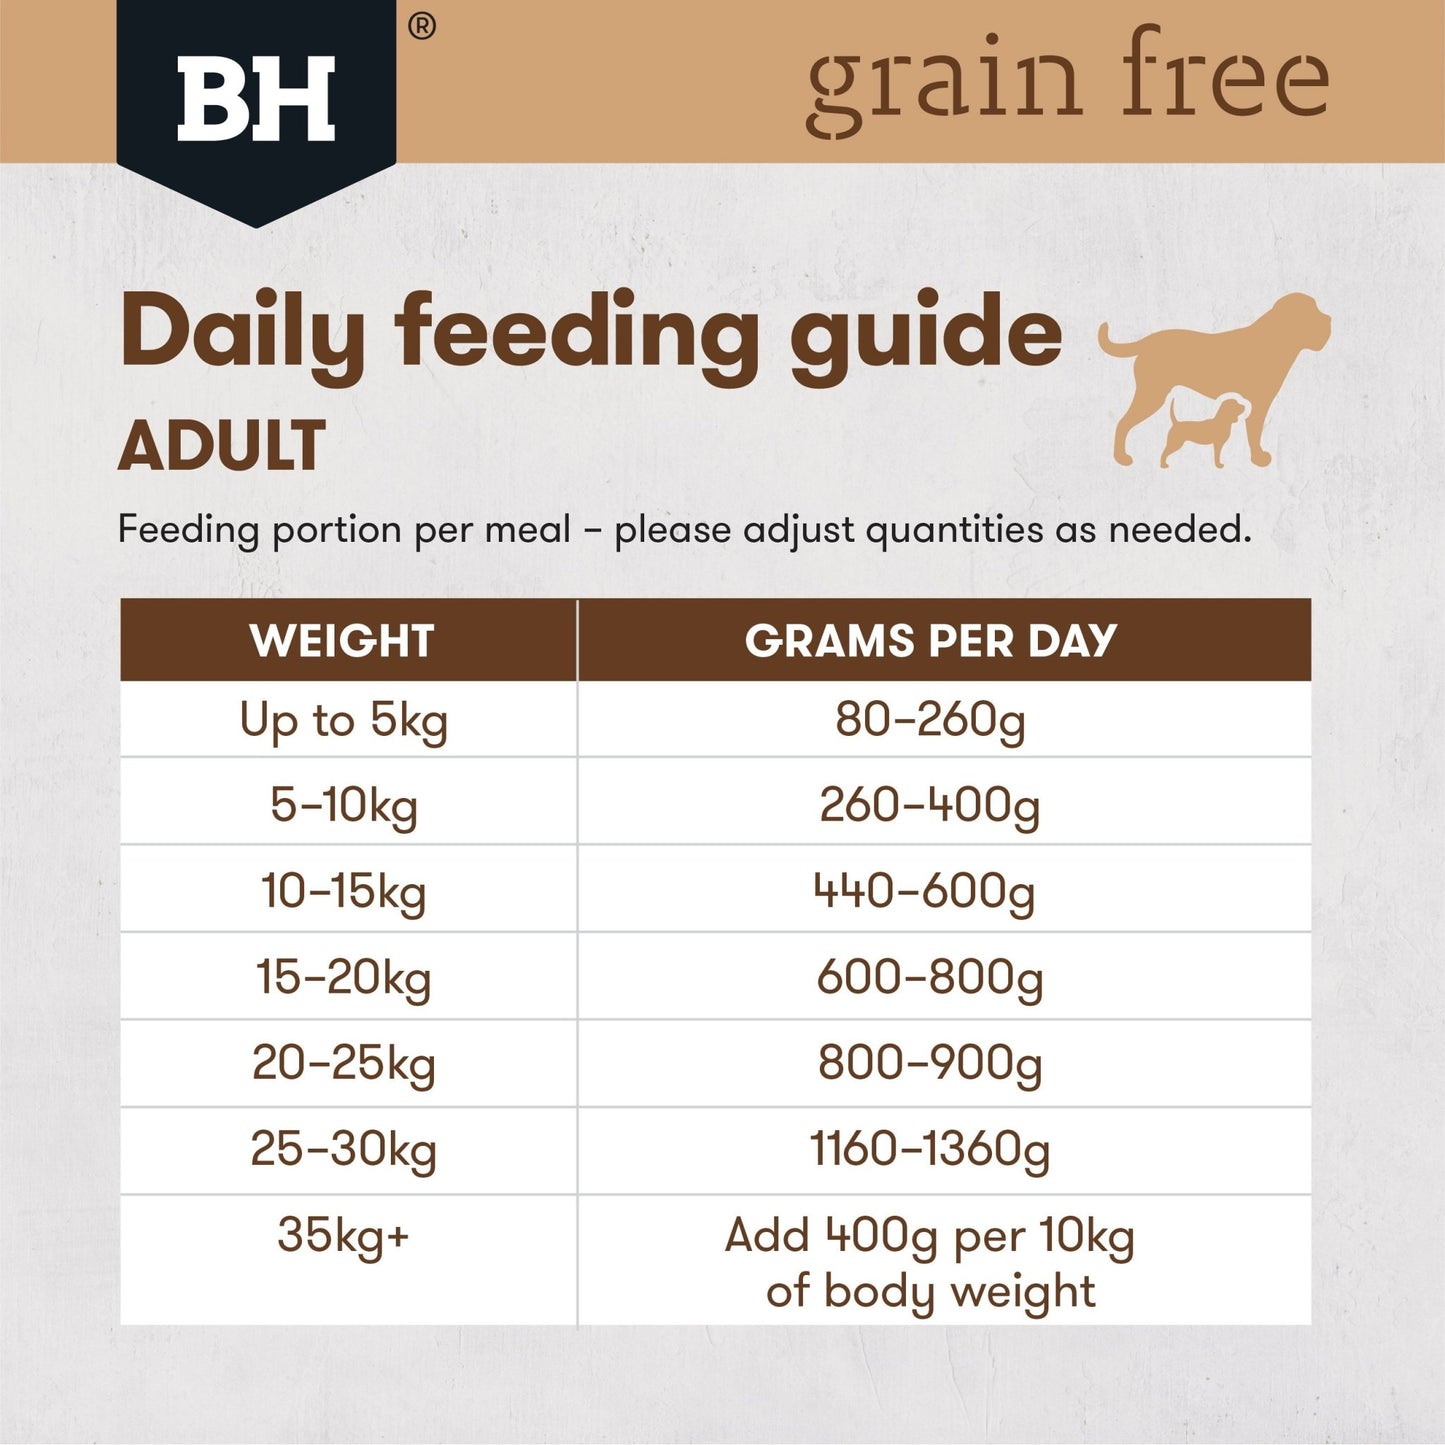 Black Hawk Grain Free Wet Dog Food 100g Lamb - Woonona Petfood & Produce